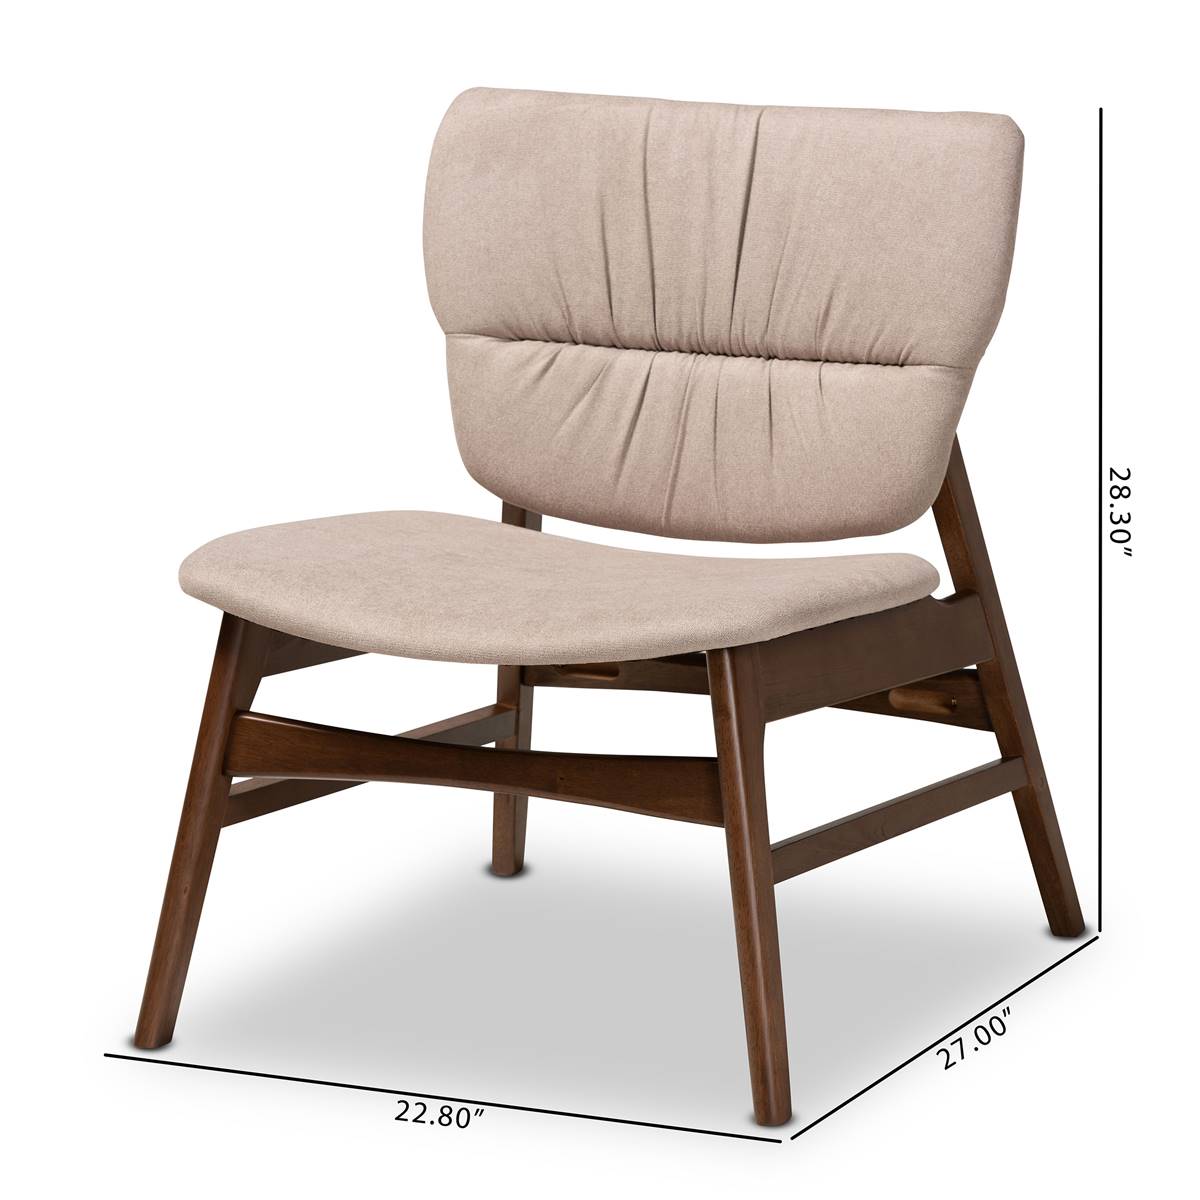 Baxton Studio Benito Mid-Century Modern Wood Accent Chair